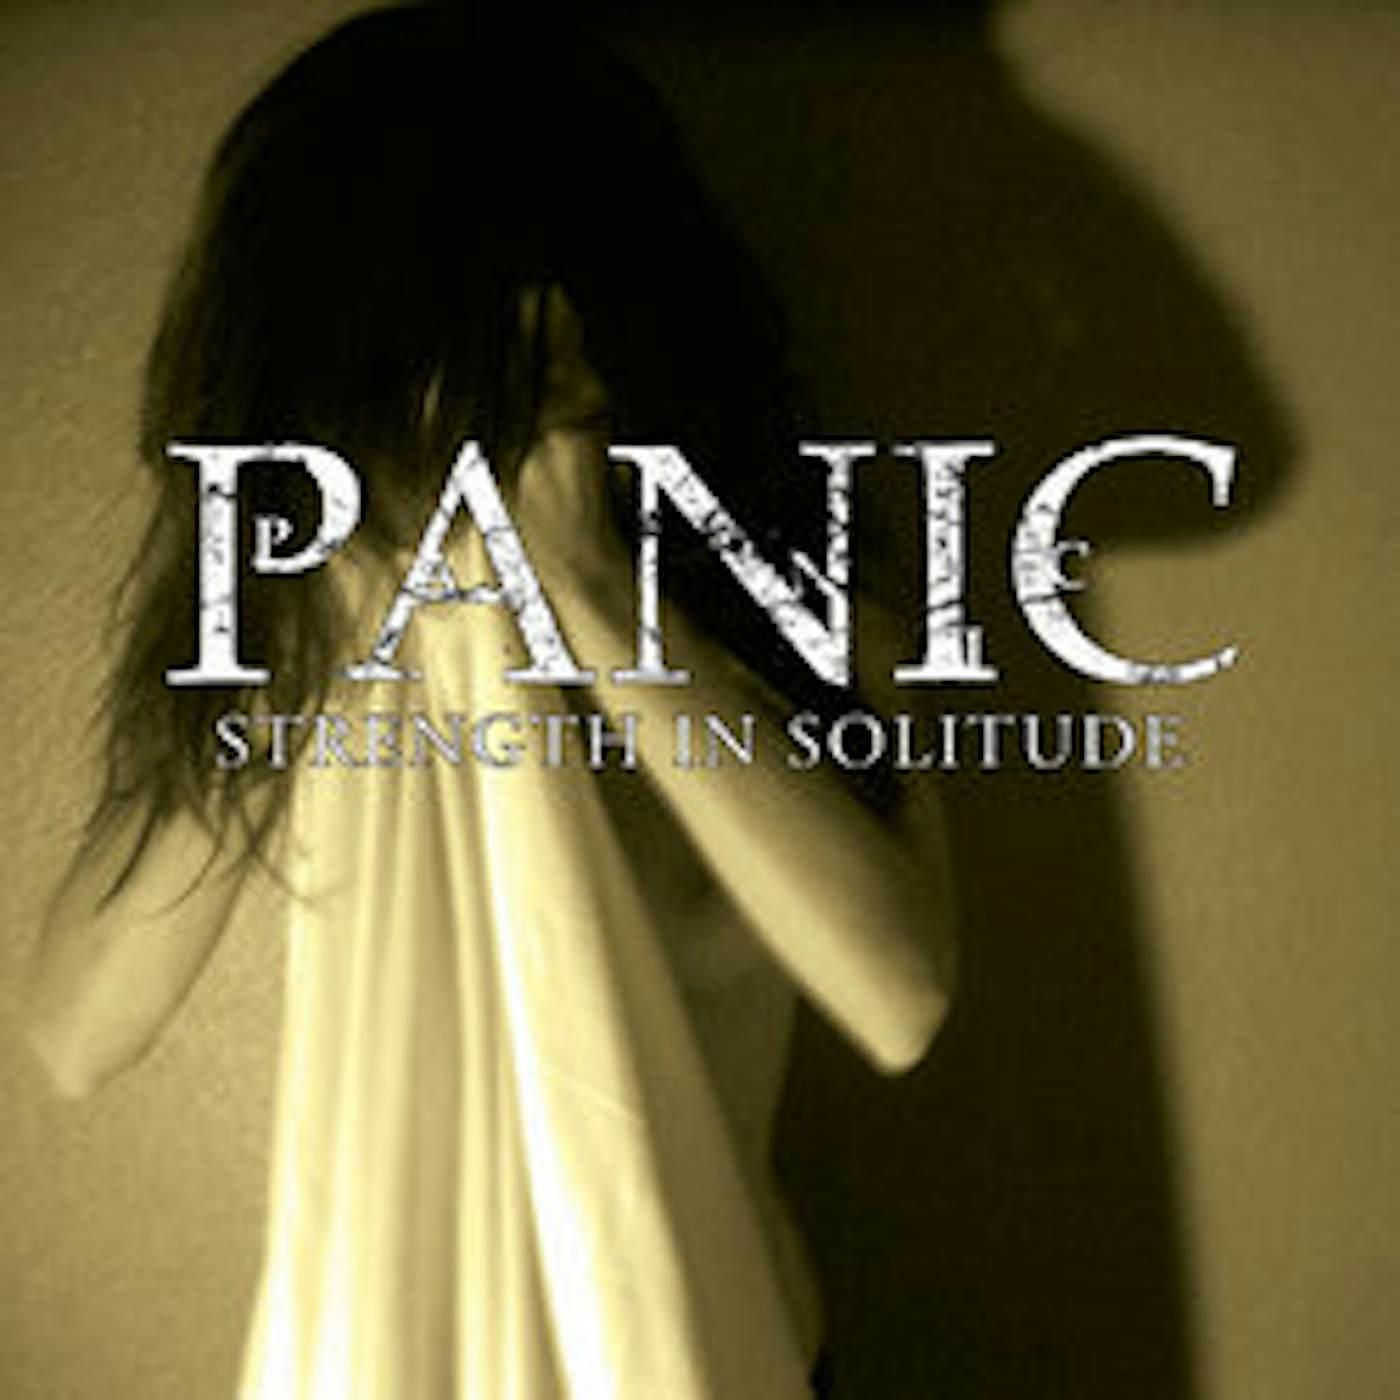 Panic Strength In Solitude Vinyl Record